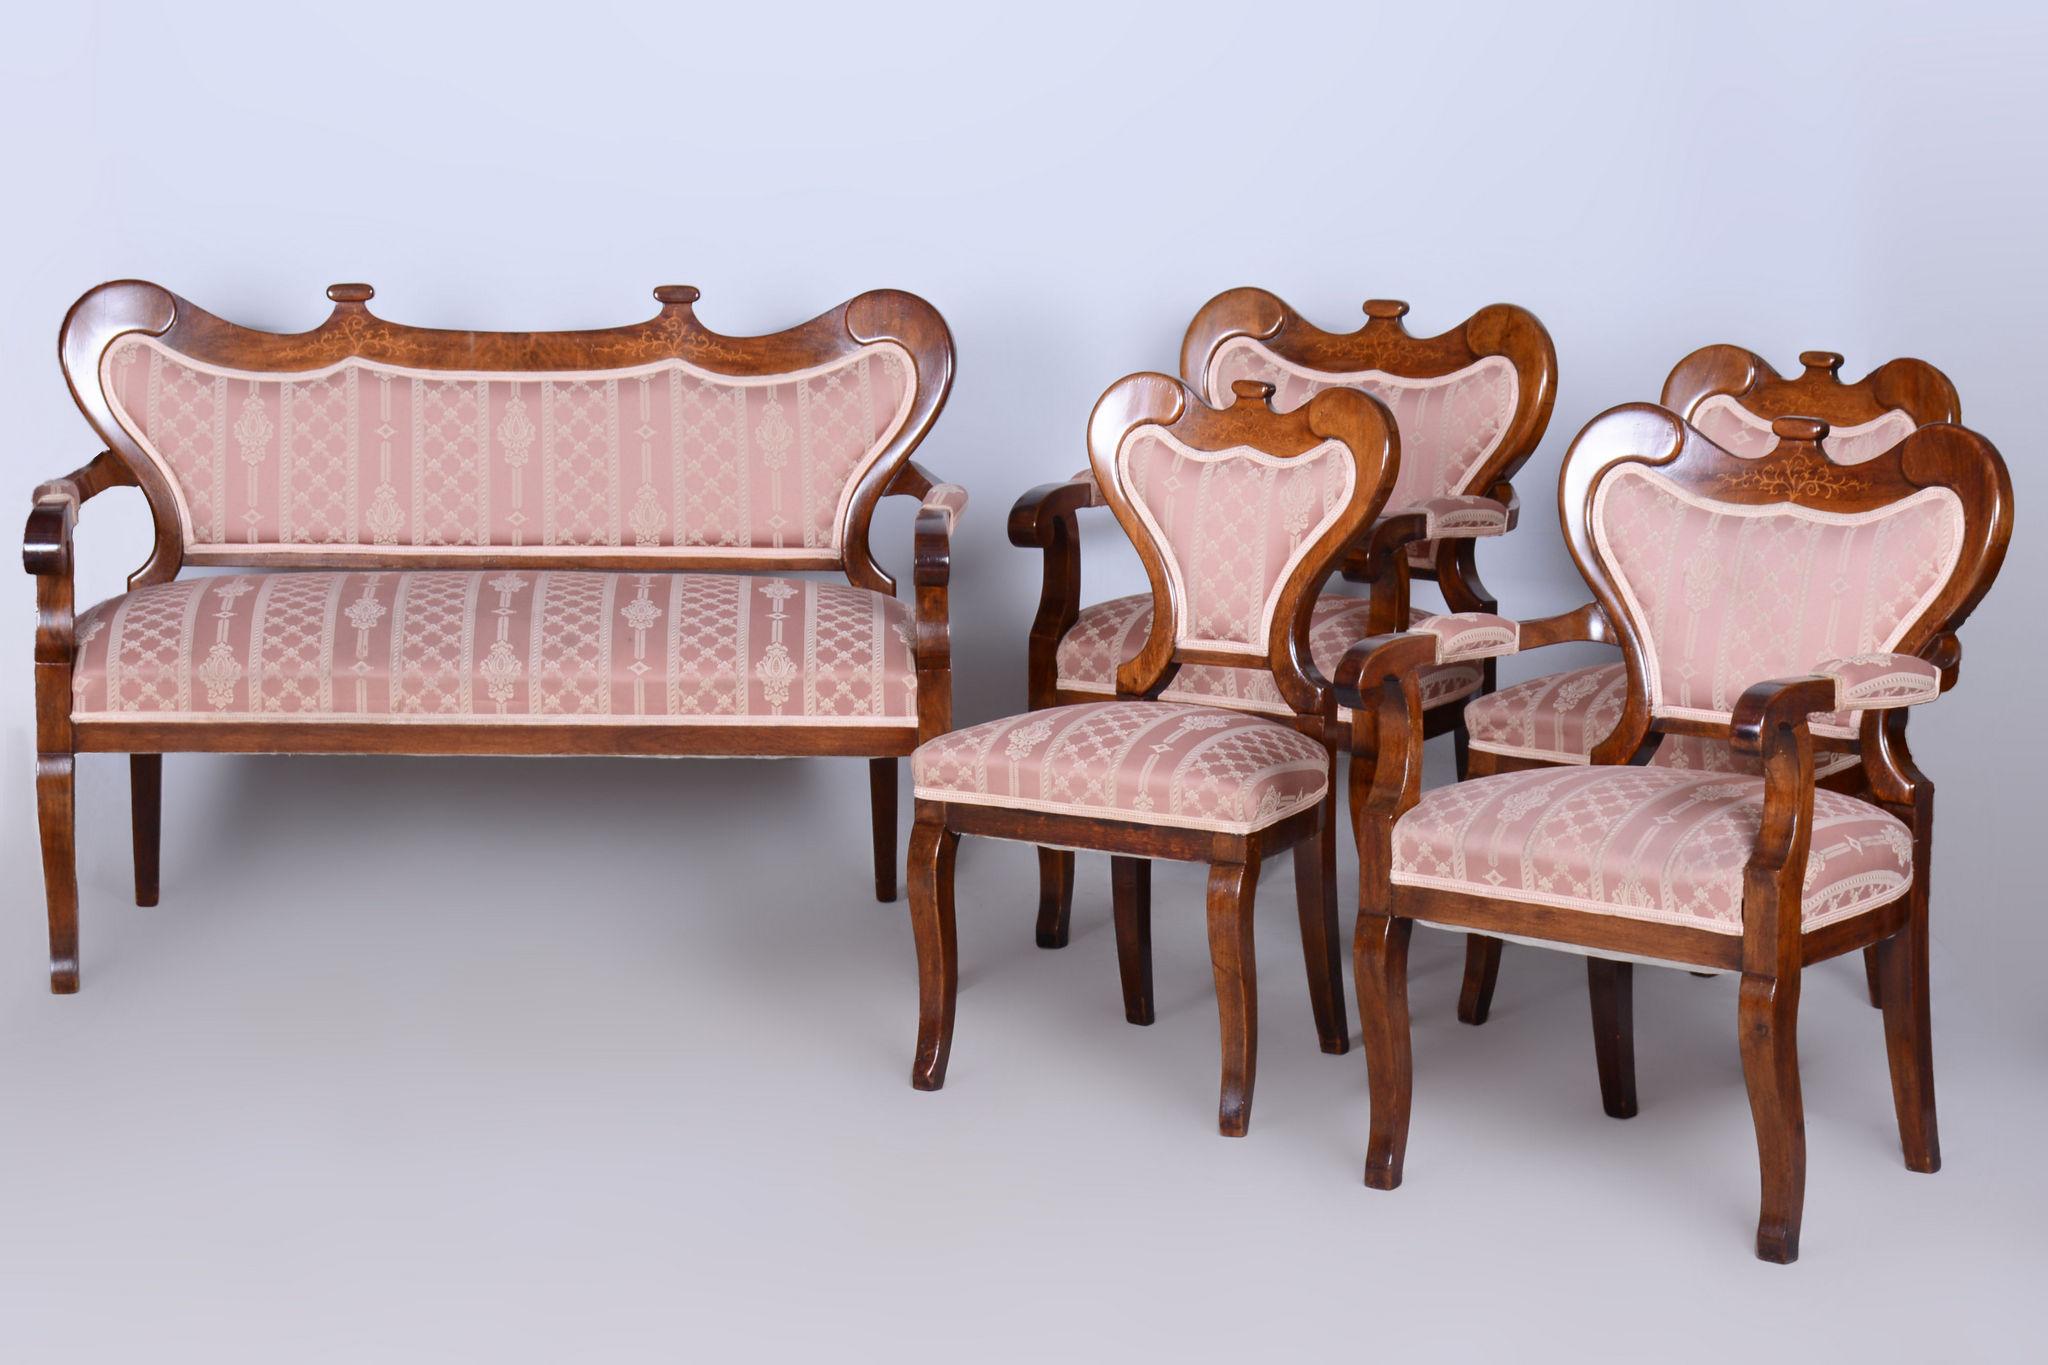 Restored Biedermeier Seating Set, Oak Walnut, Stable Constructon, Austria, 1840s For Sale 14